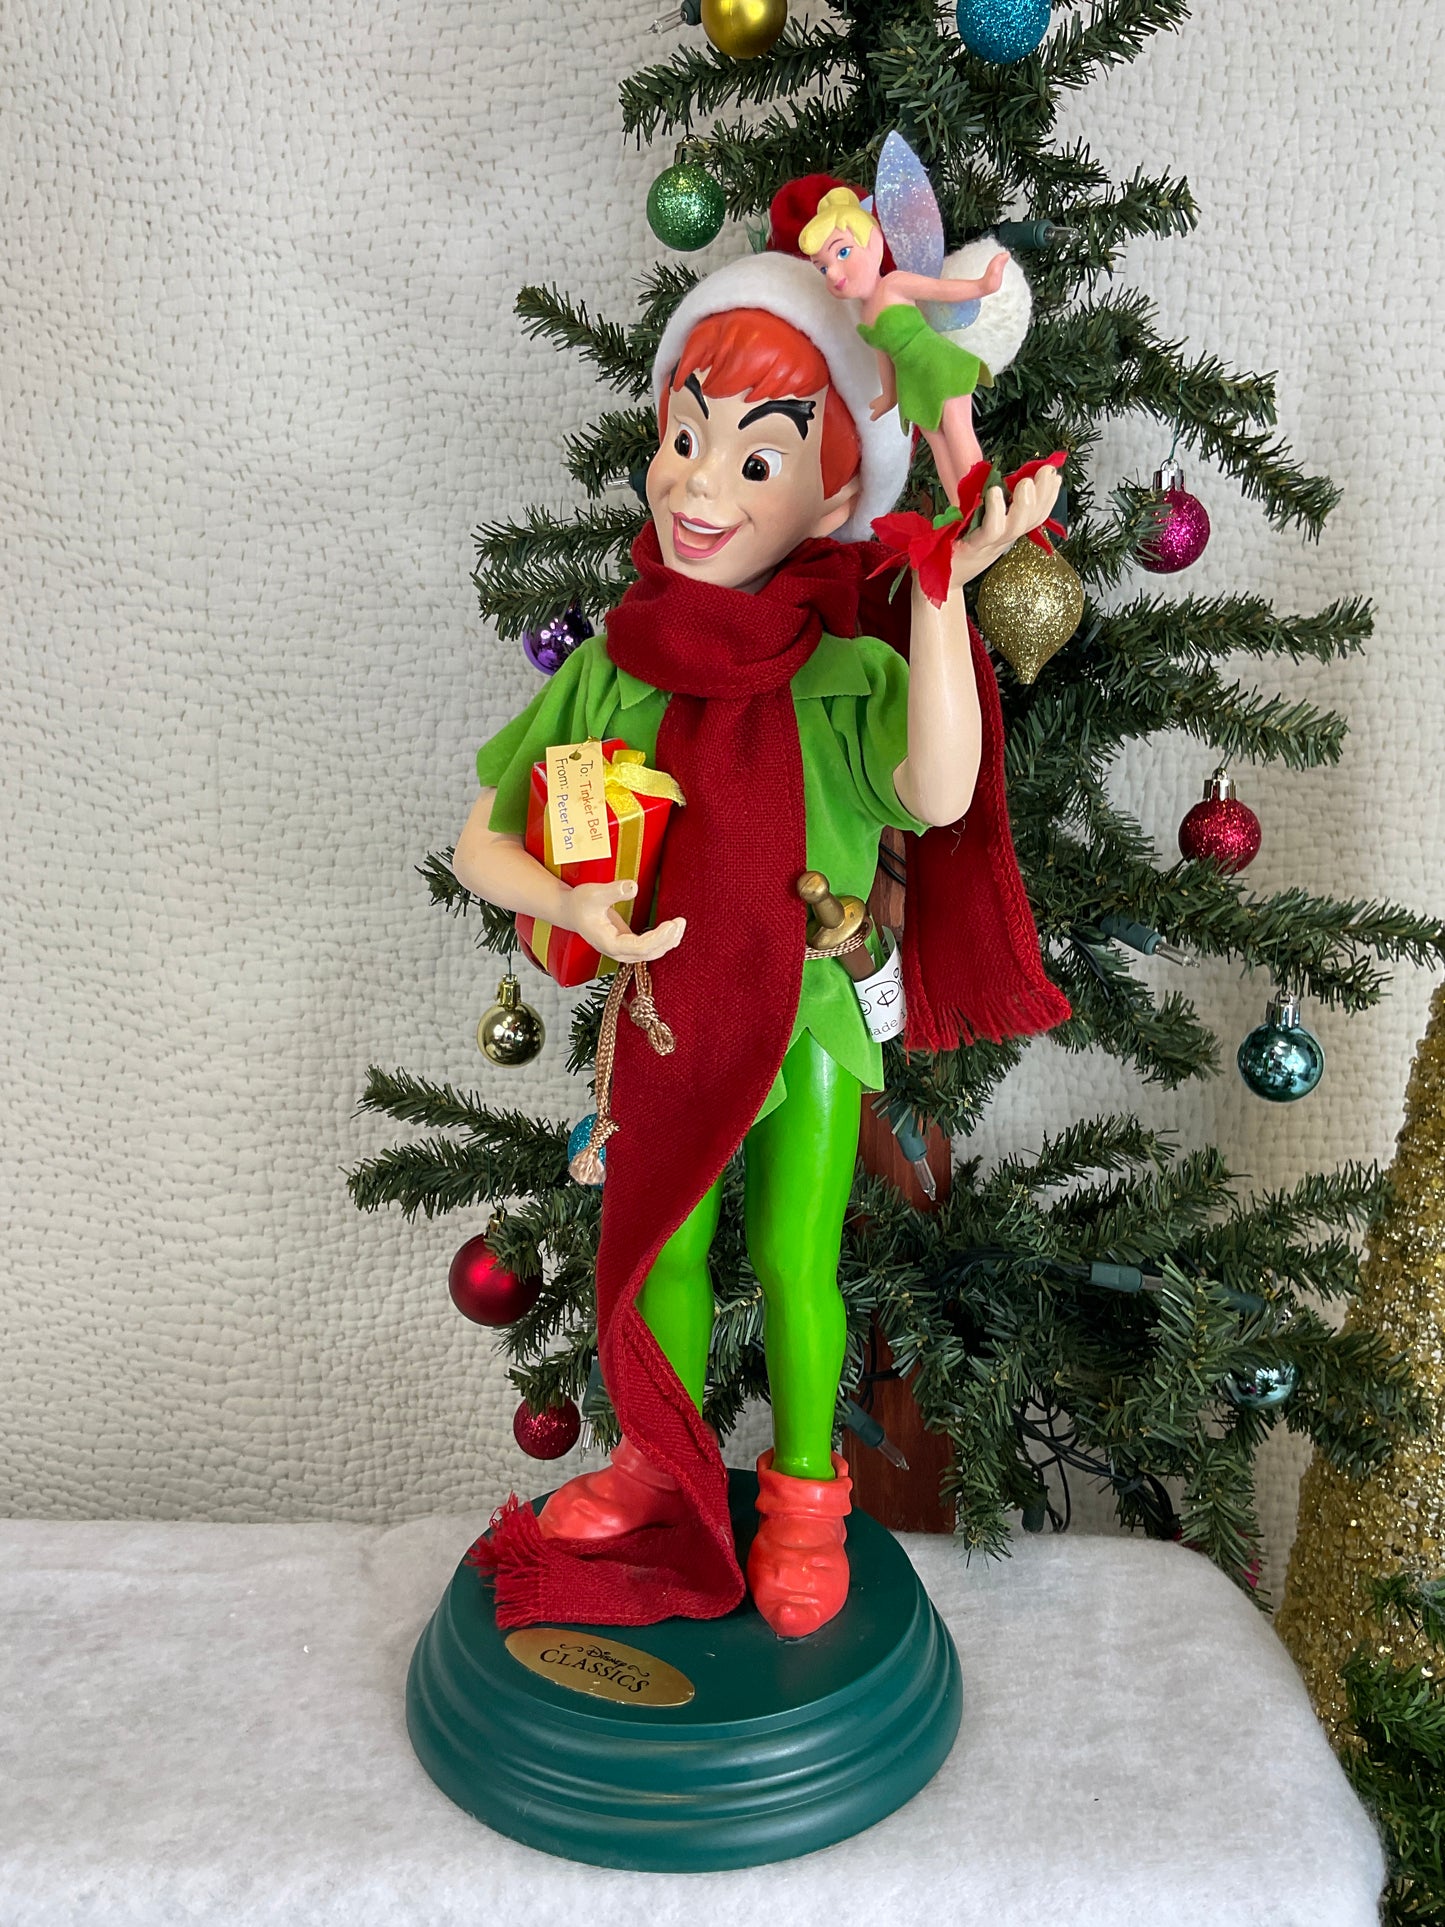 Disney's Peter Pan & Tinkerbell Musical Figurine